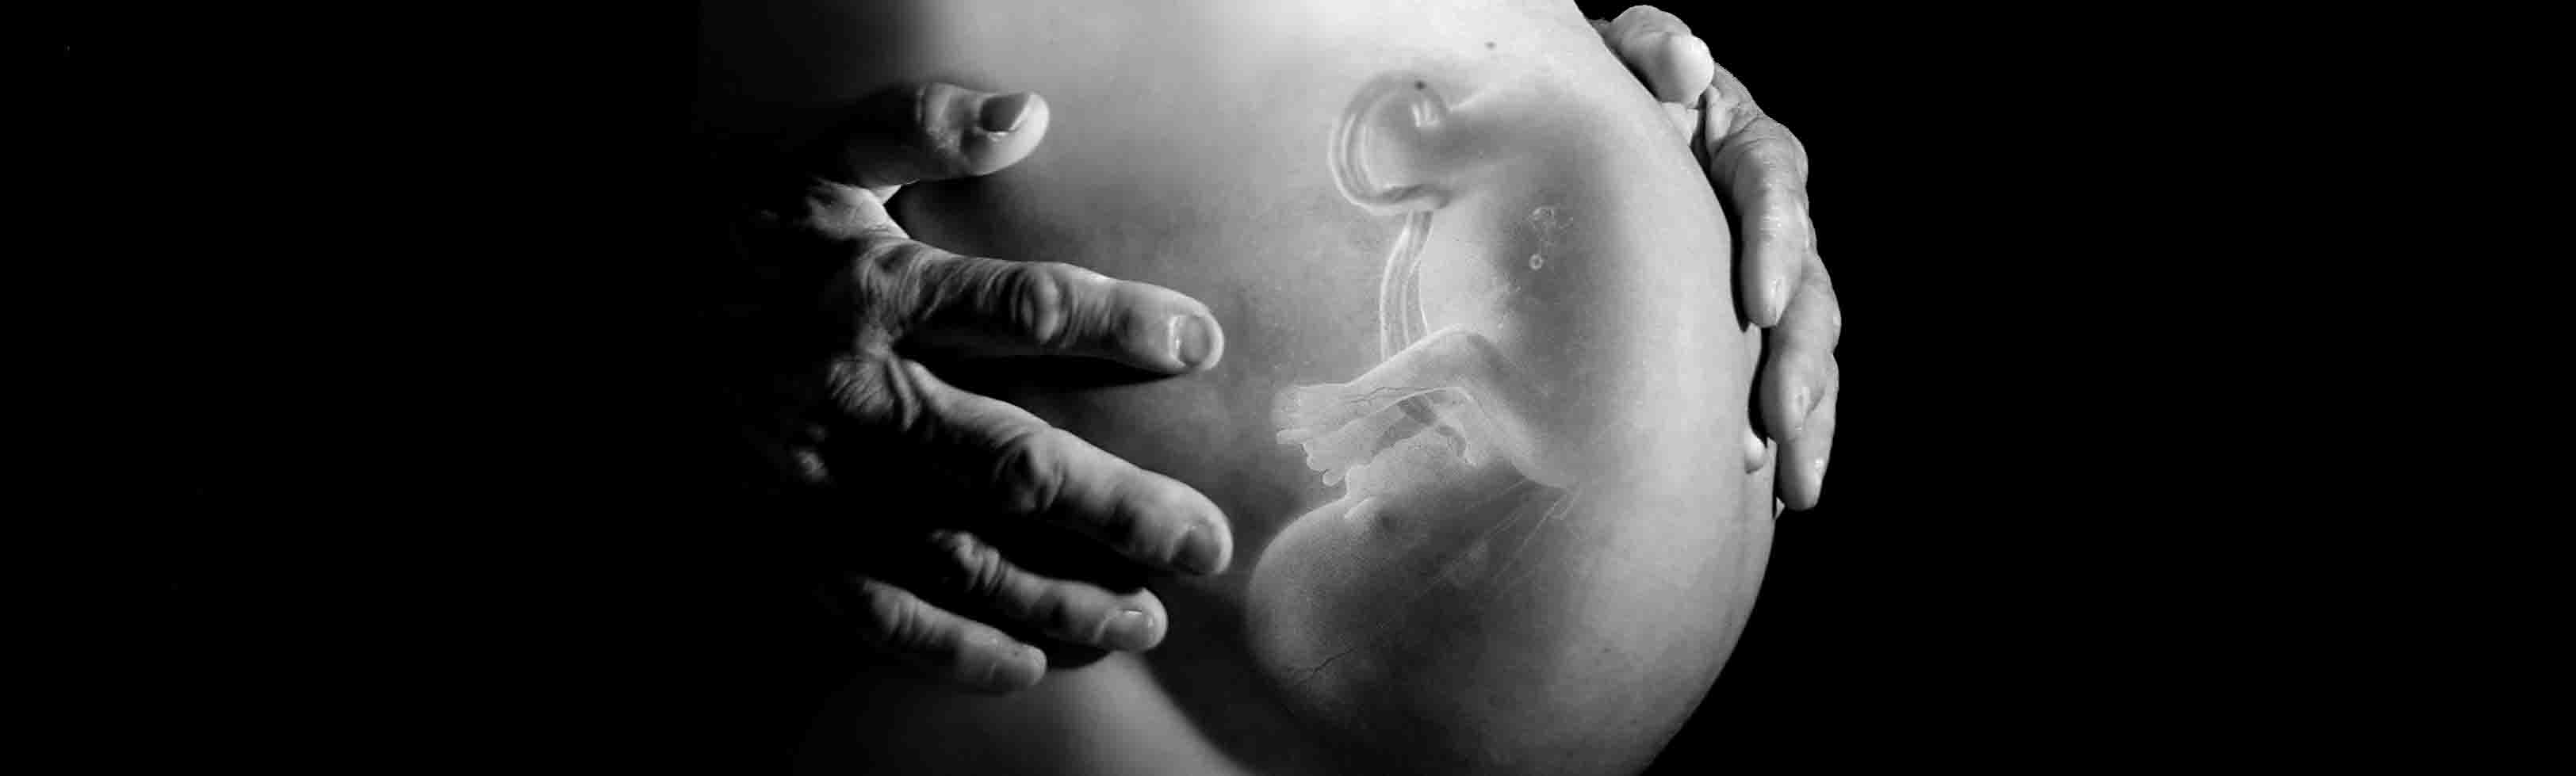 Porod, miminko - fakta o porodu